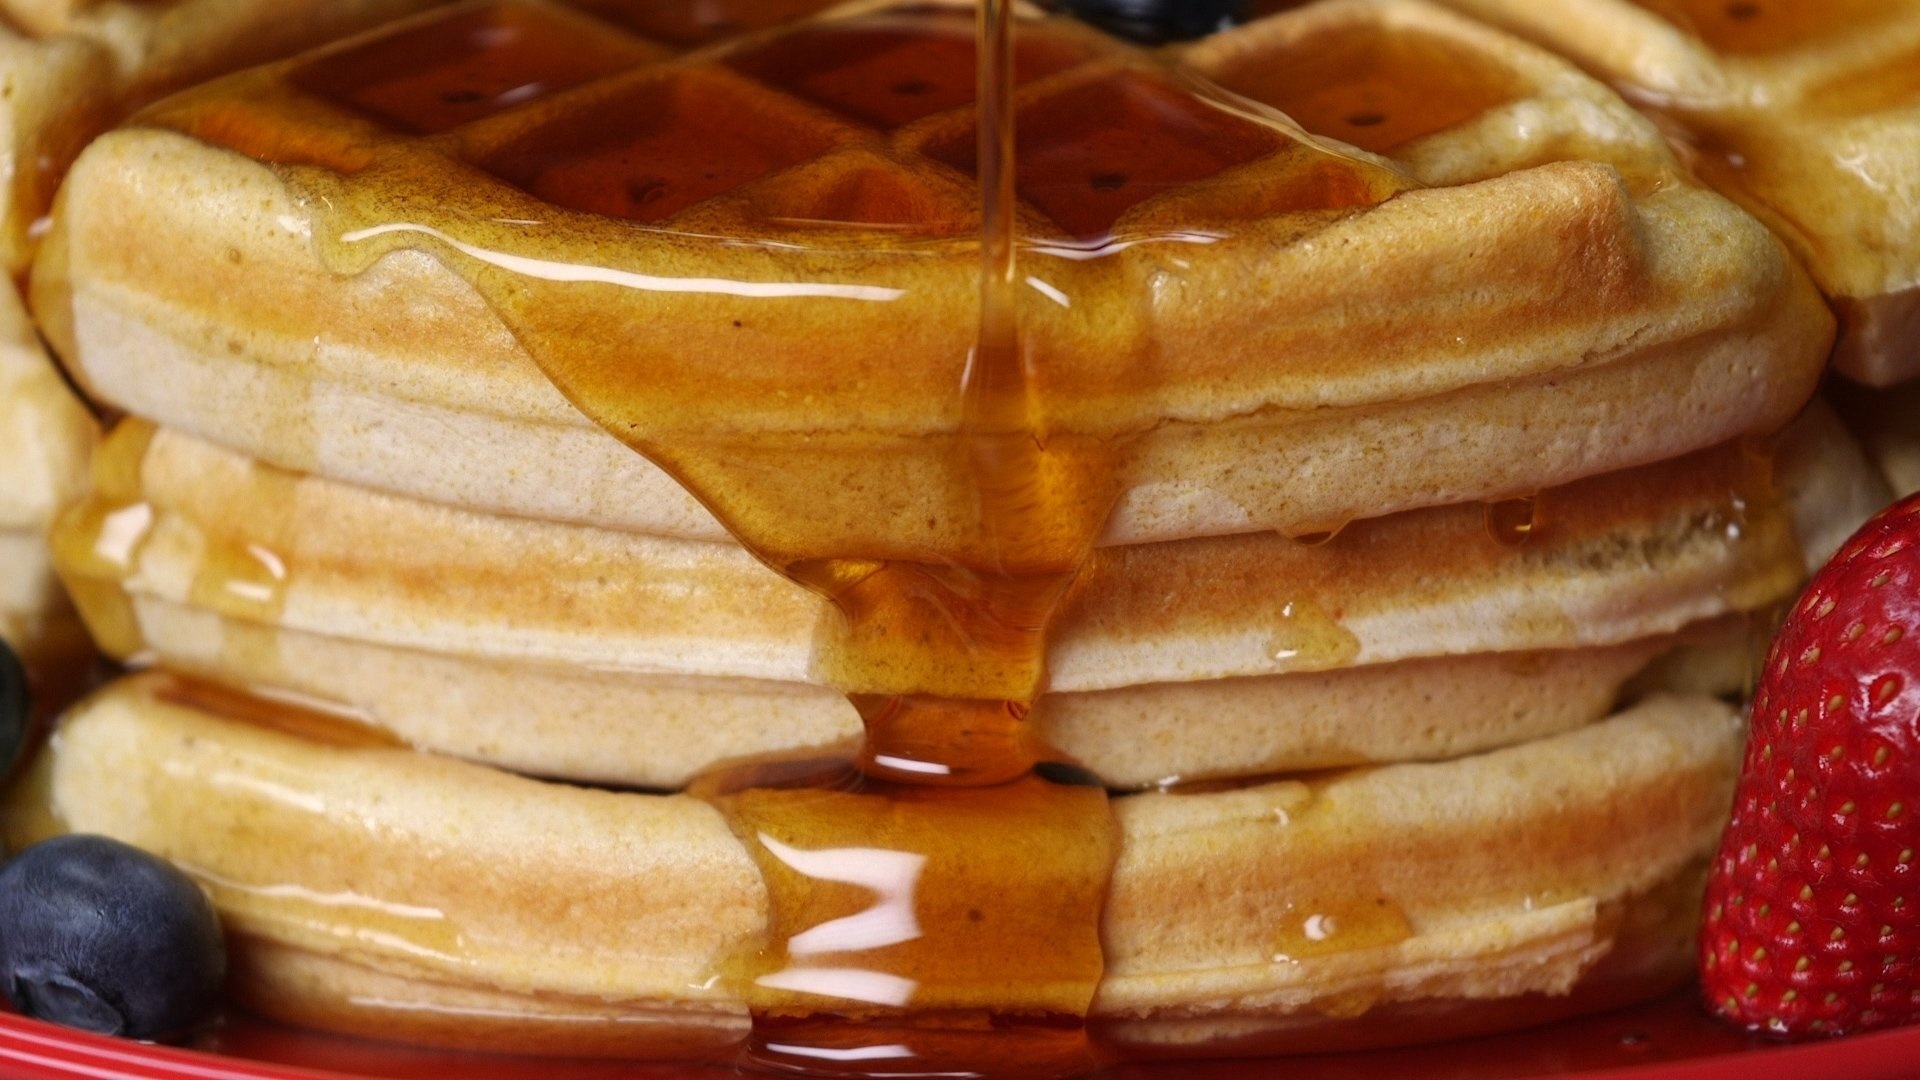 Maple syrup on waffles, Sweet breakfast treat, Indulgent dessert, Food wallpaper, 1920x1080 Full HD Desktop